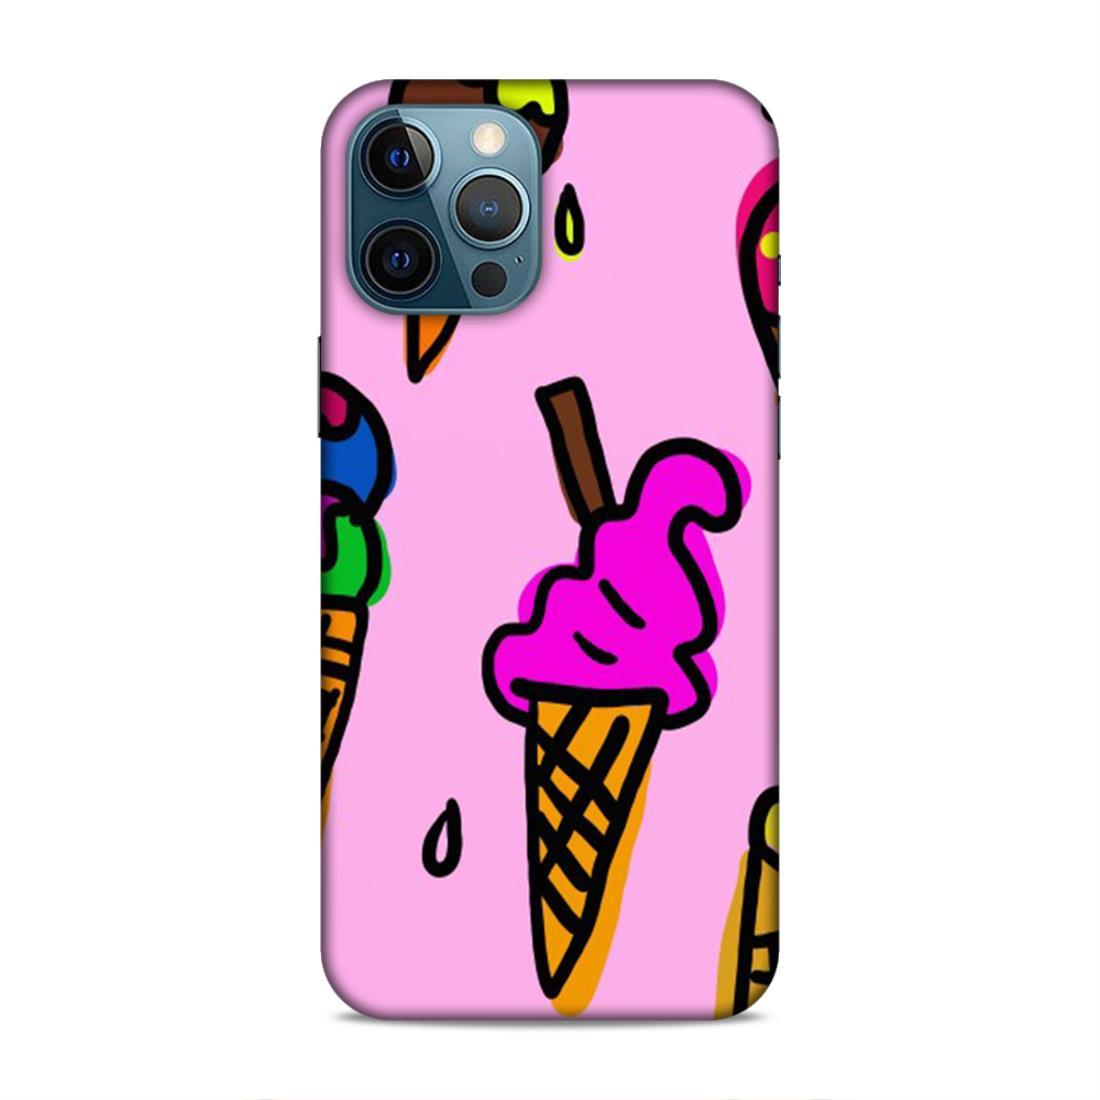 Icecream Pink iPhone 12 Pro Max Phone Cover